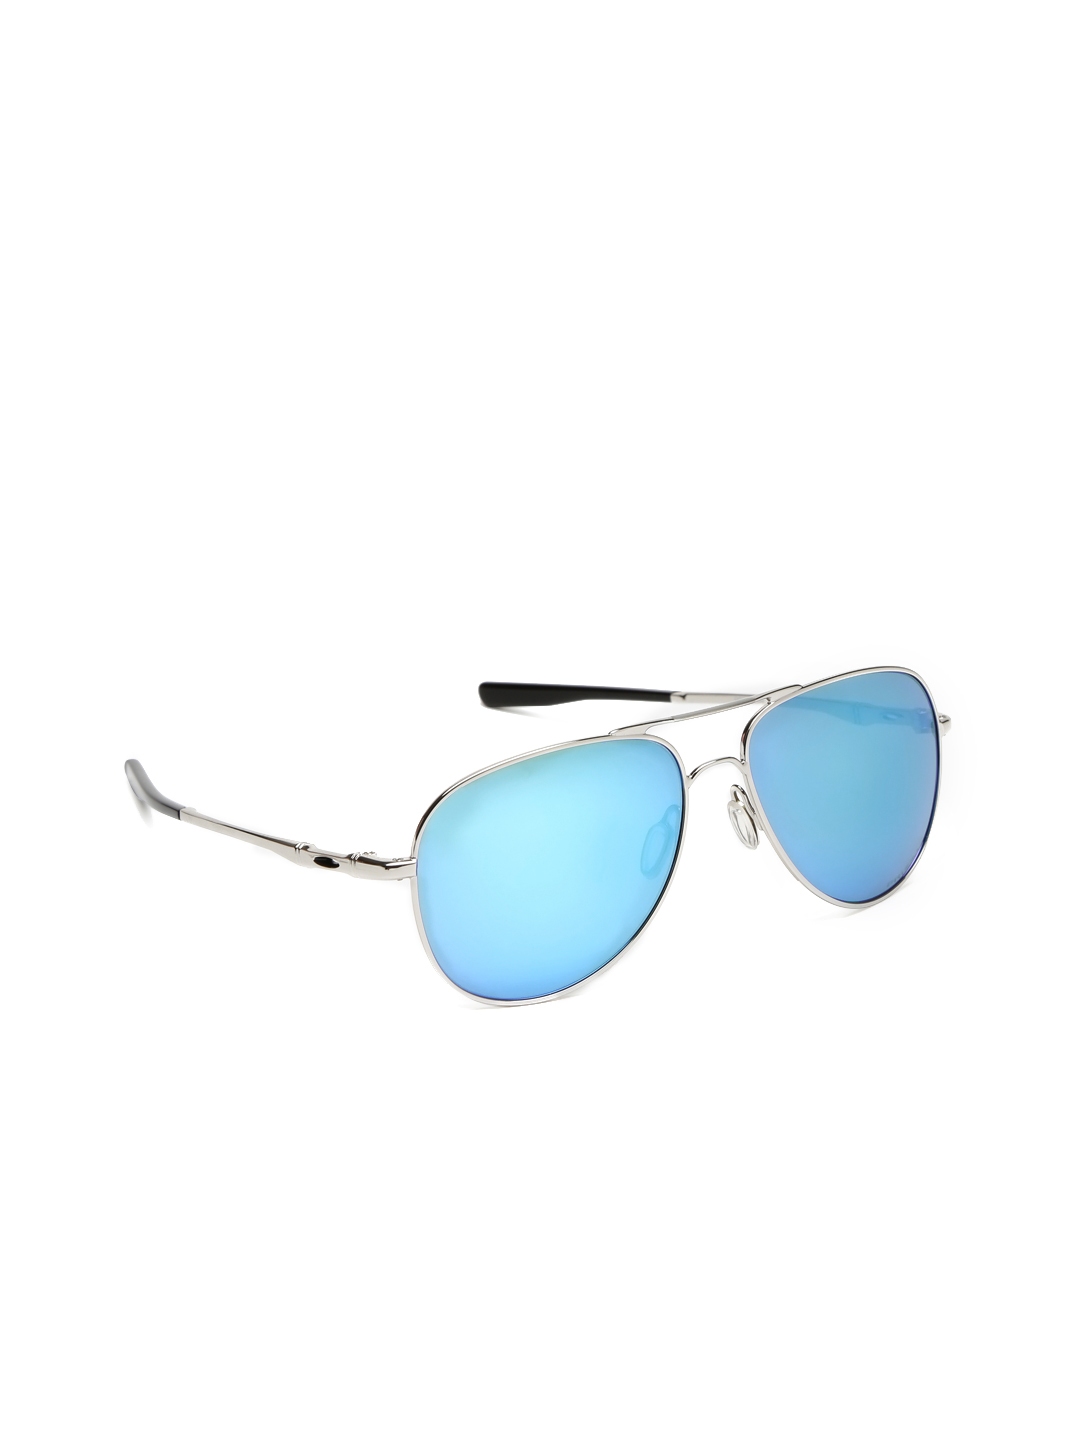 Buy OAKLEY Men Aviator Sunglasses - Sunglasses for Men 2349946 | Myntra